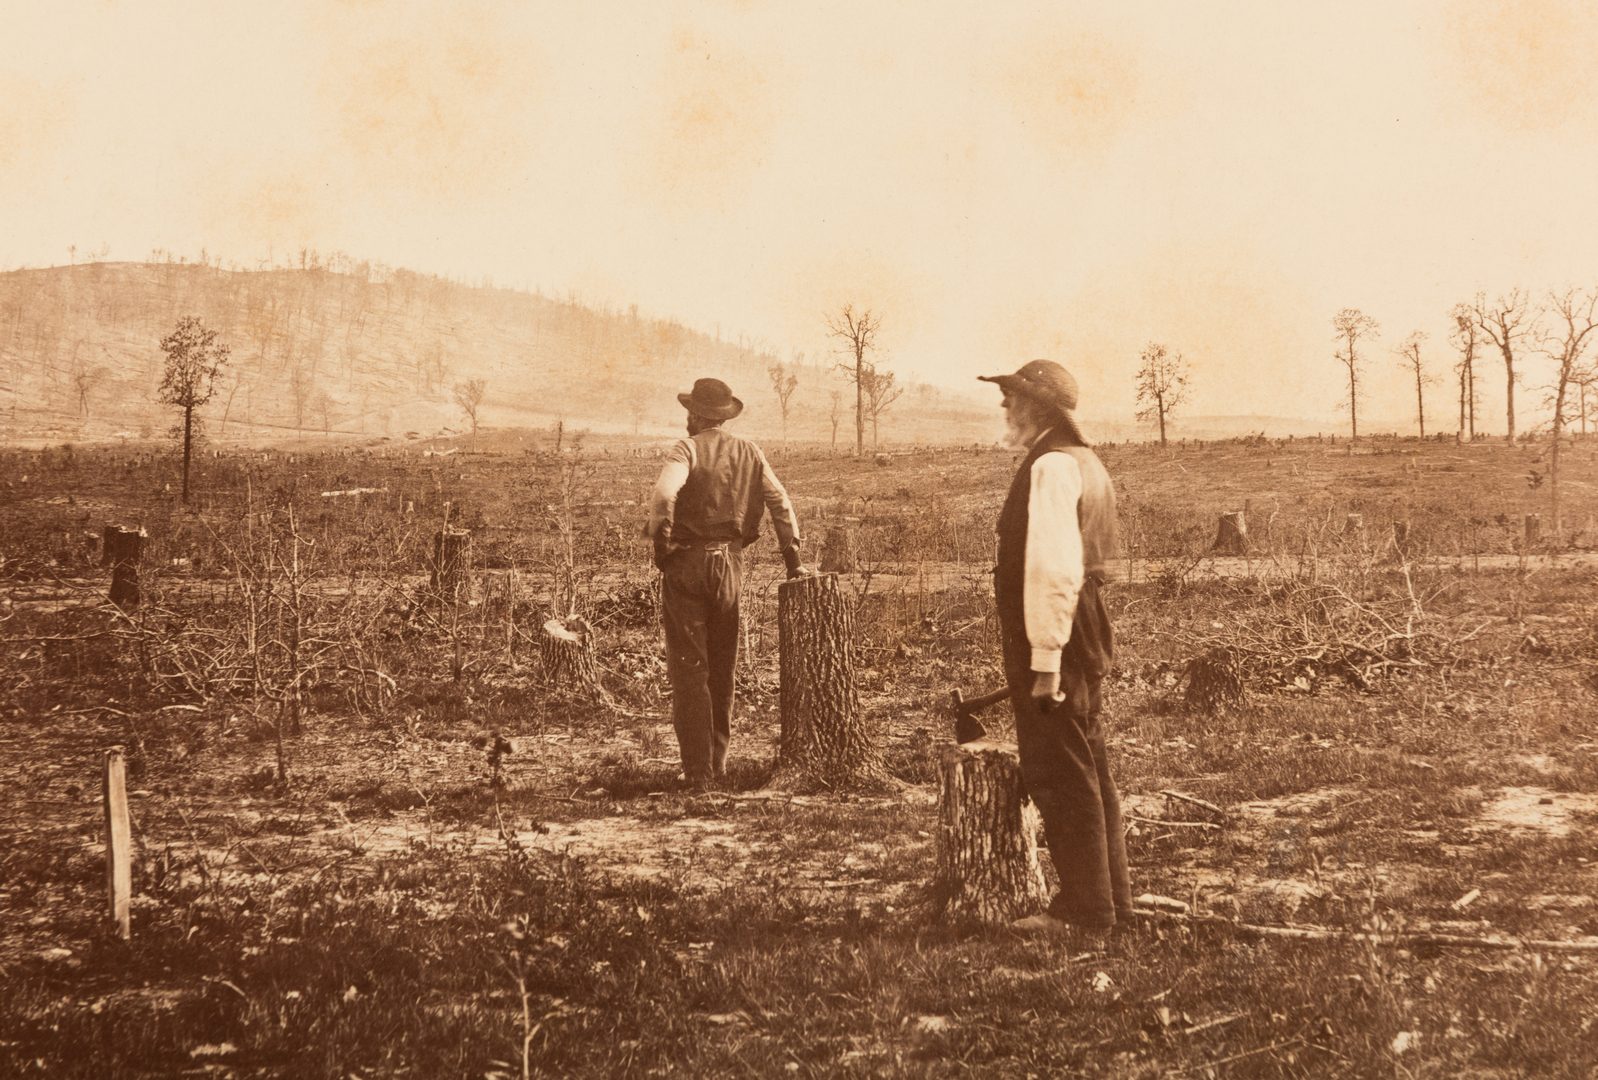 Lot 520: 6 C.H. Boyd Civil War Photographs, Chattanooga and Mission Ridge